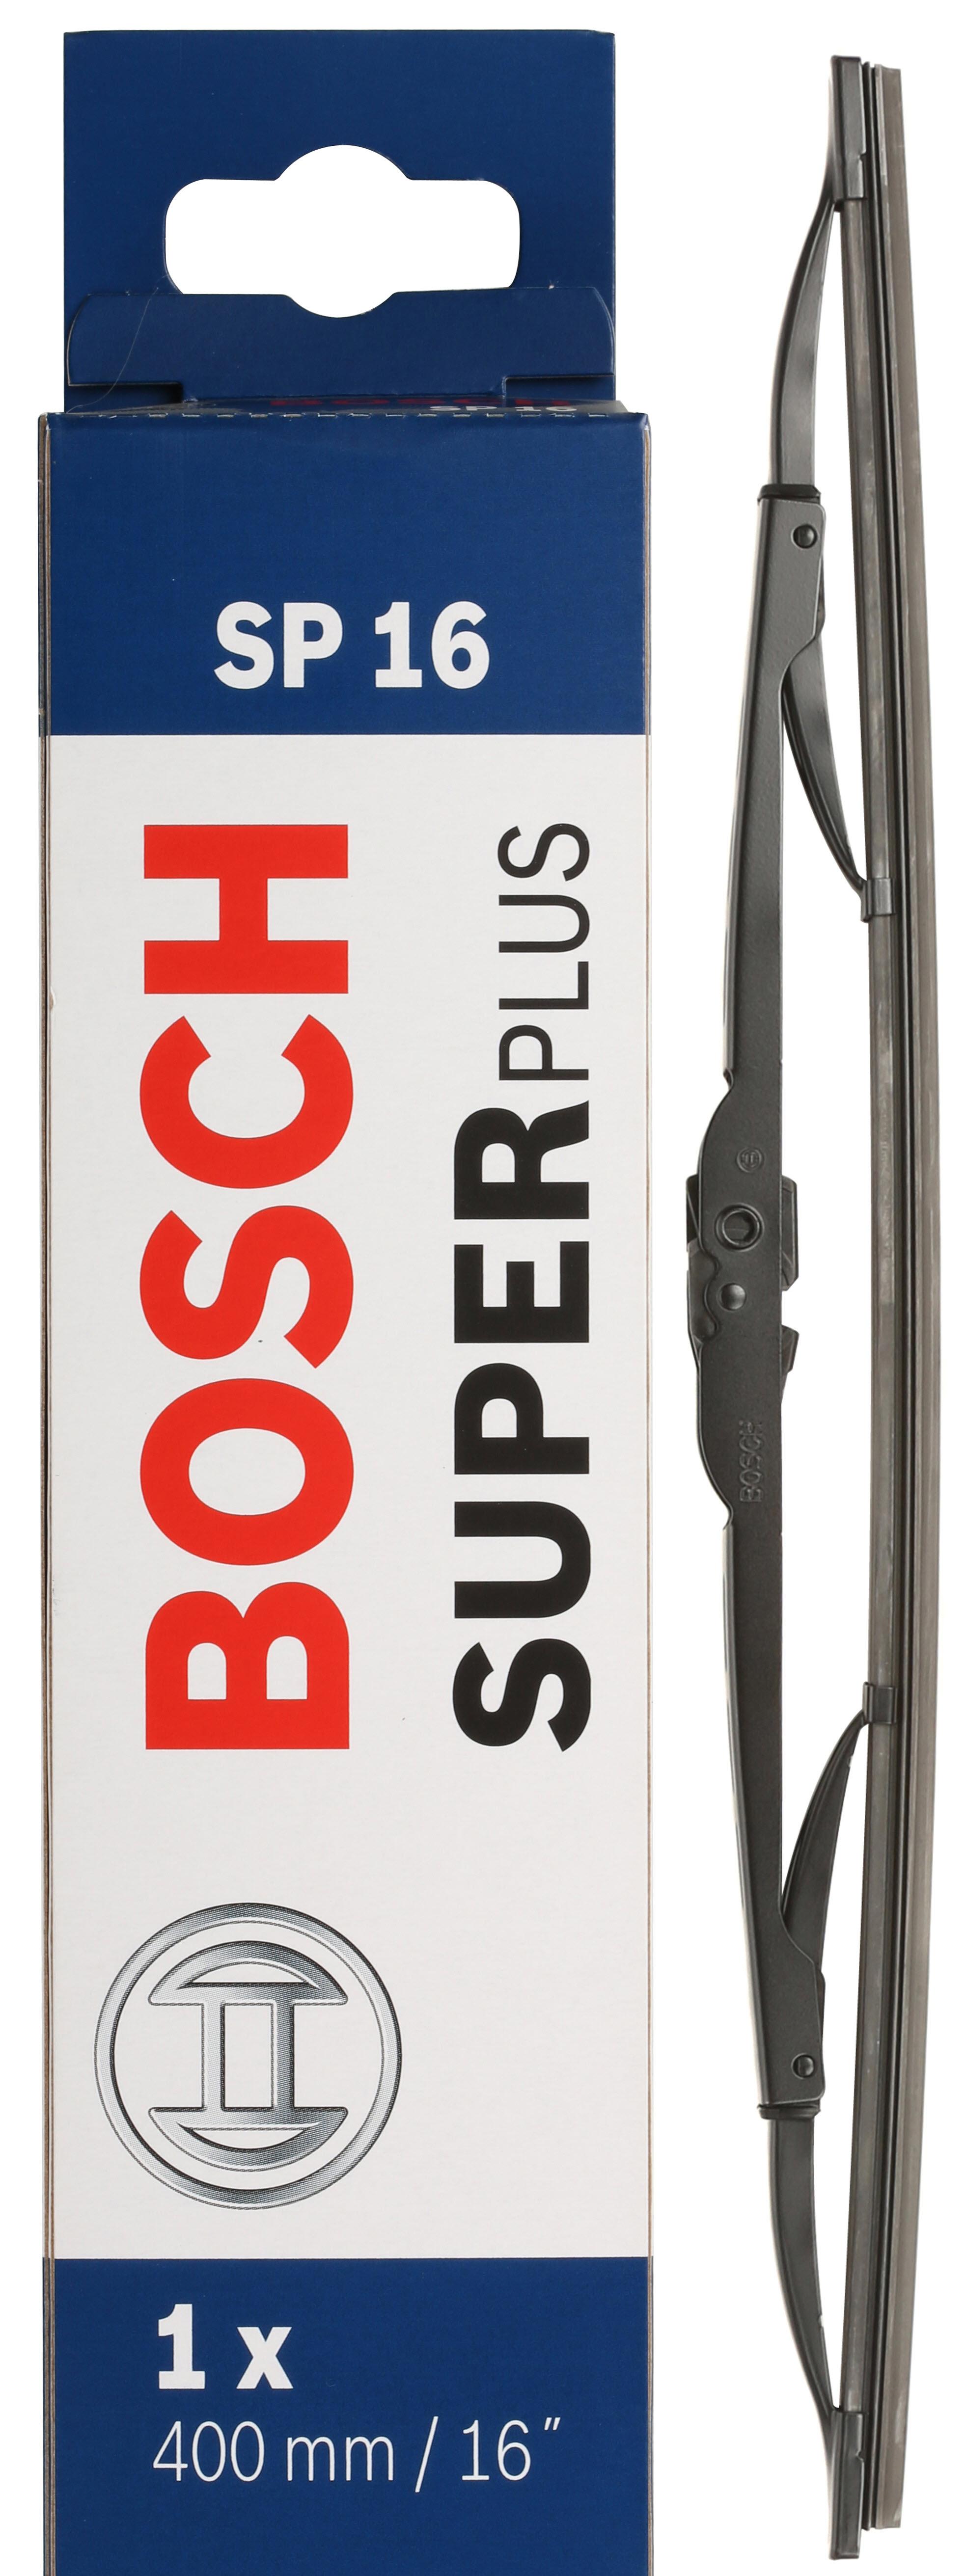 Bosch Sp16 Wiper Blade - Single